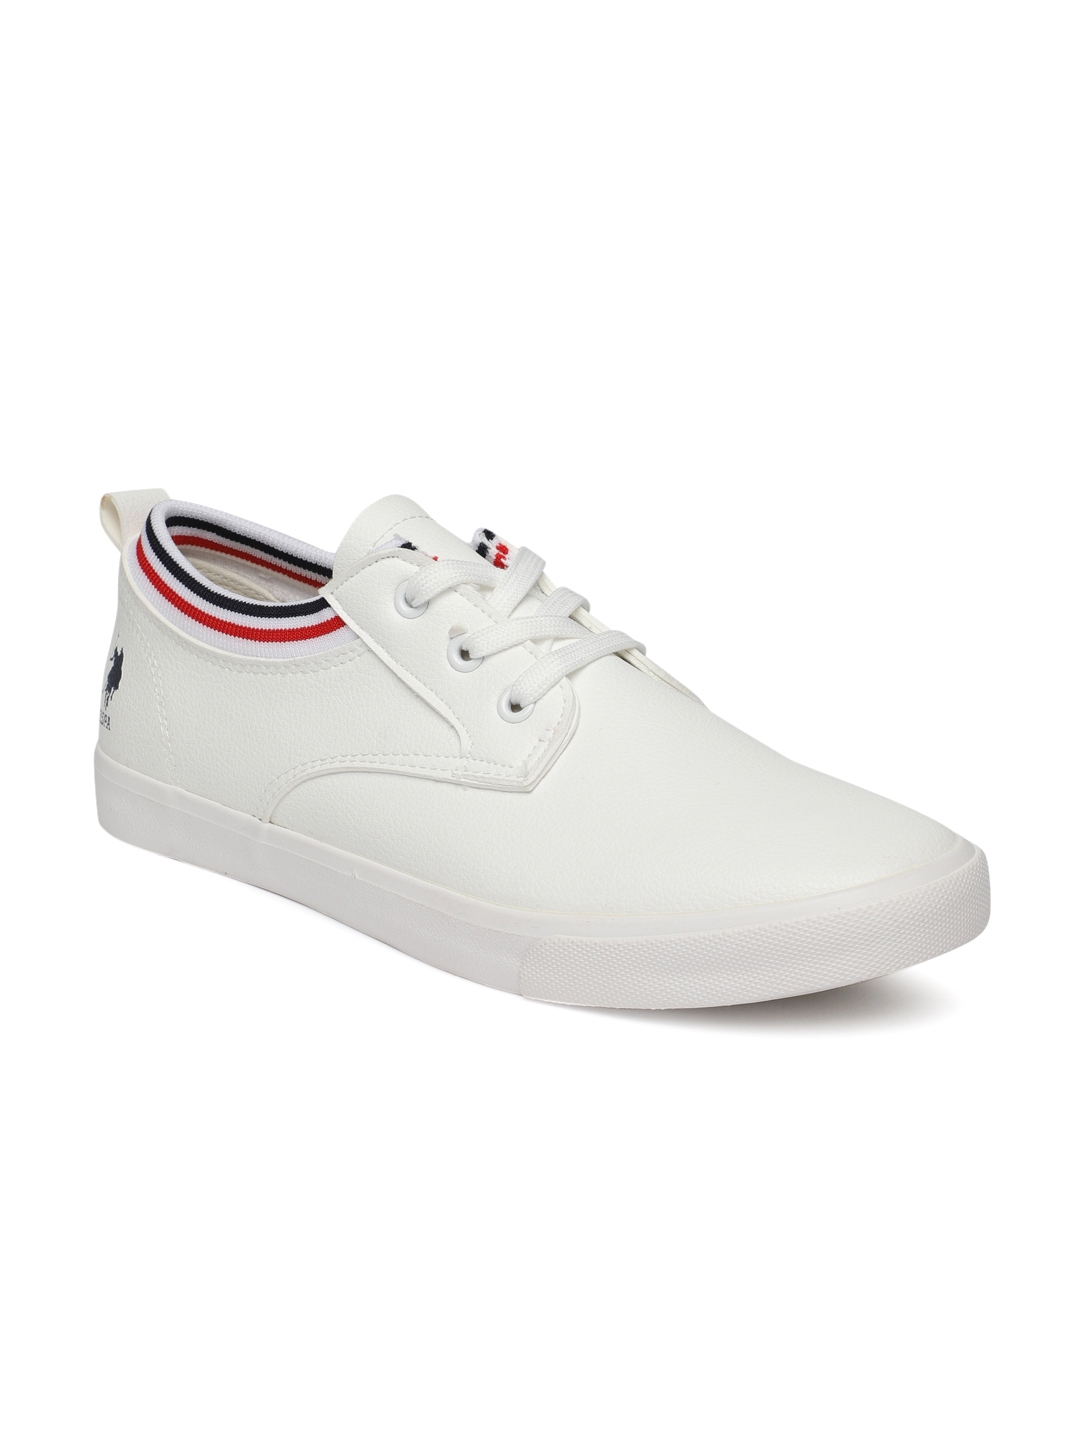 Buy U.S. Polo Assn. Men White Sneakers - Casual Shoes for Men 7808885 ...